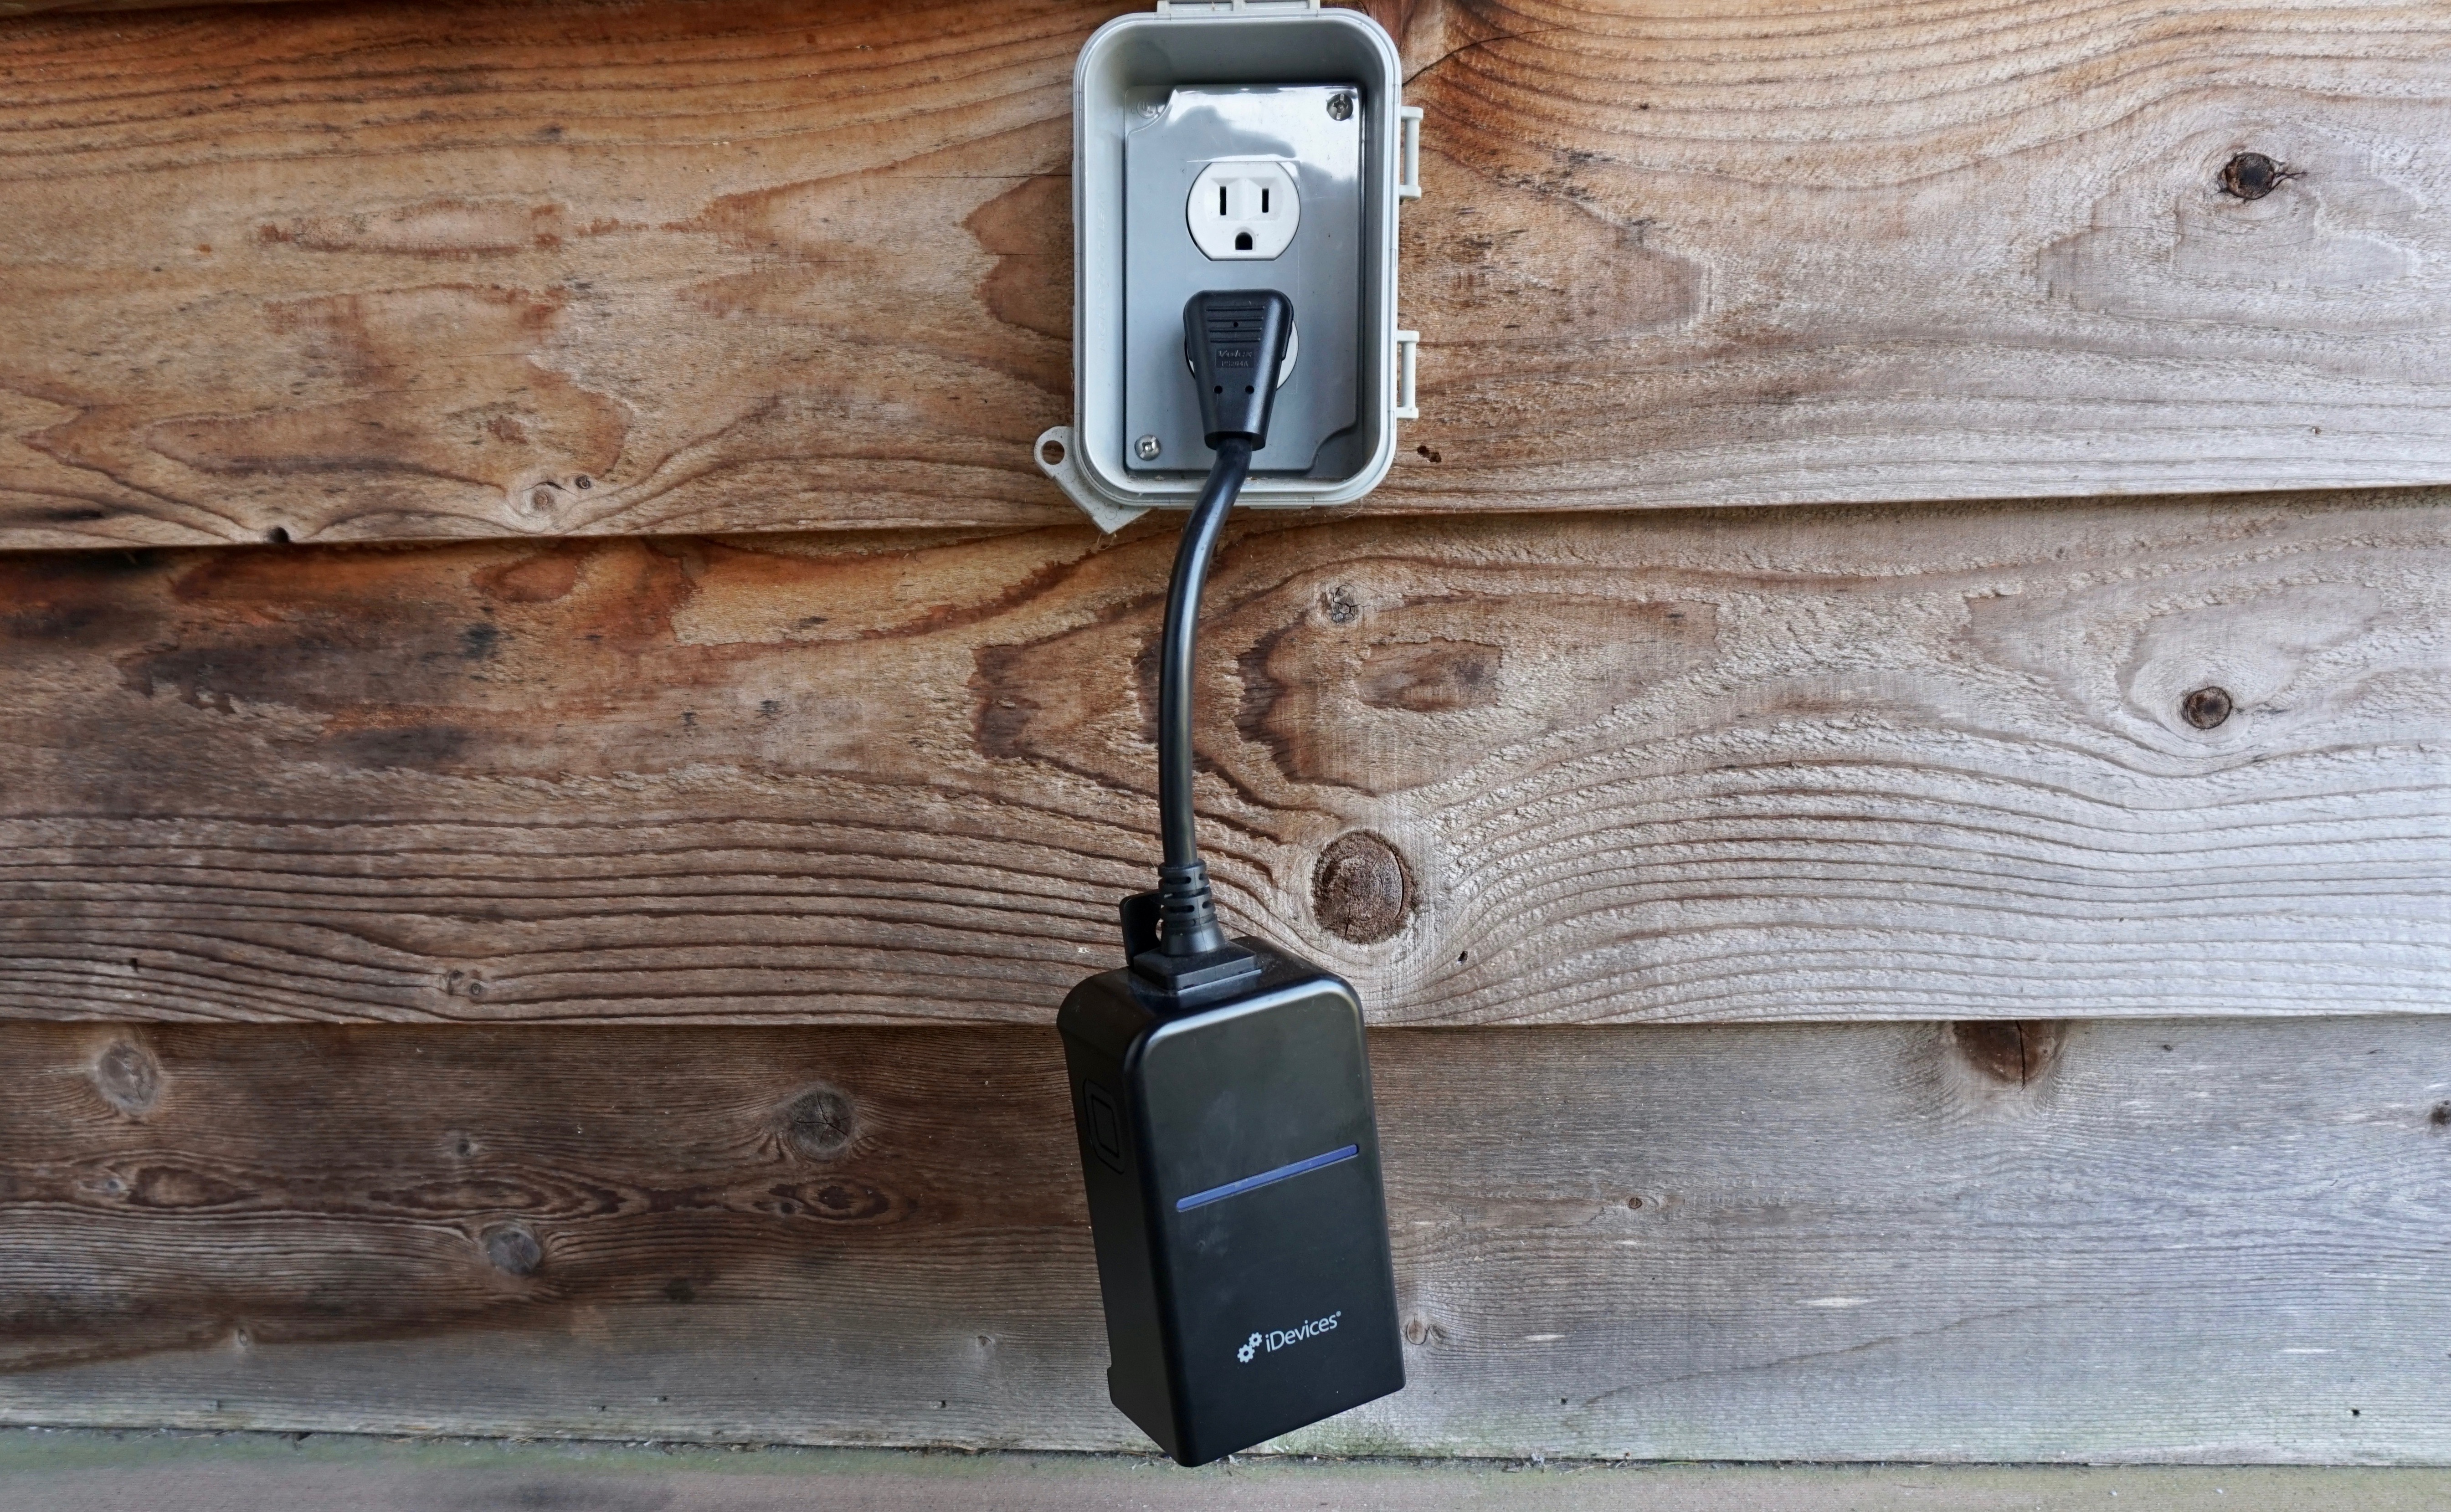 Philips Hue brings HomeKit control to your Christmas tree with its $29 smart  plug (Reg. $35)